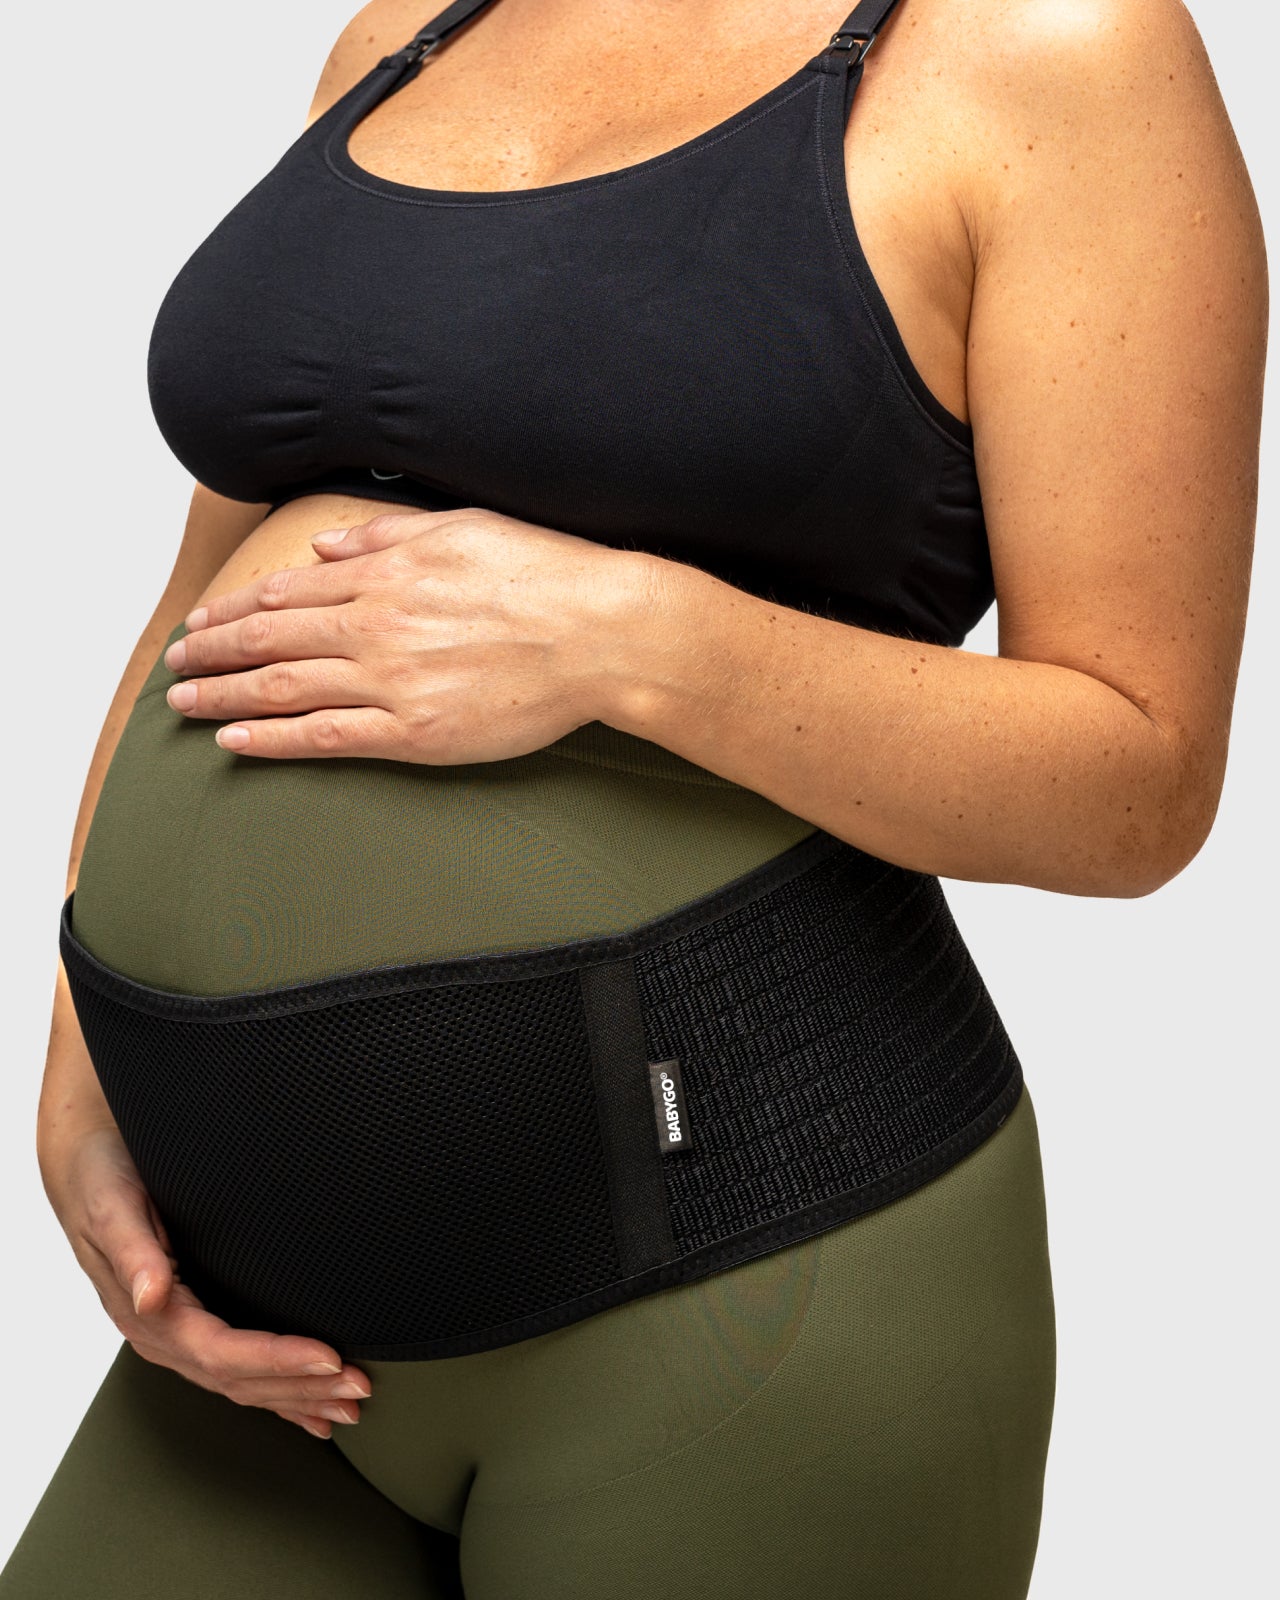 BabyGo Postpartum Belt ~ Back & Pelvic Support Size XL Black ~ NEW in Box -  Morris